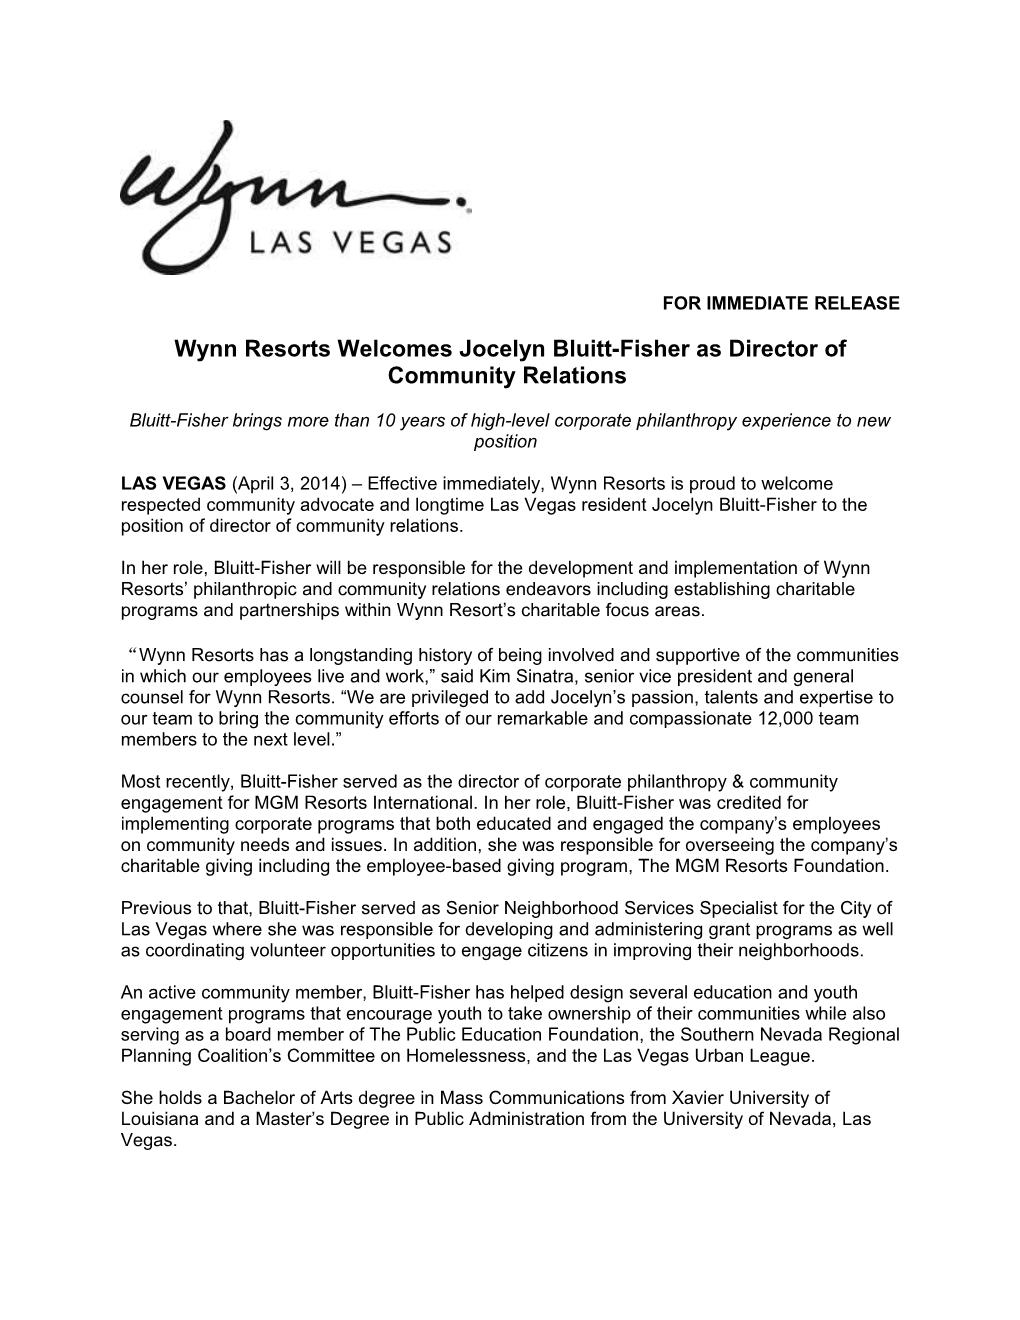 Wynn Resorts Welcomes Jocelyn Bluitt-Fisher As Director of Community Relations